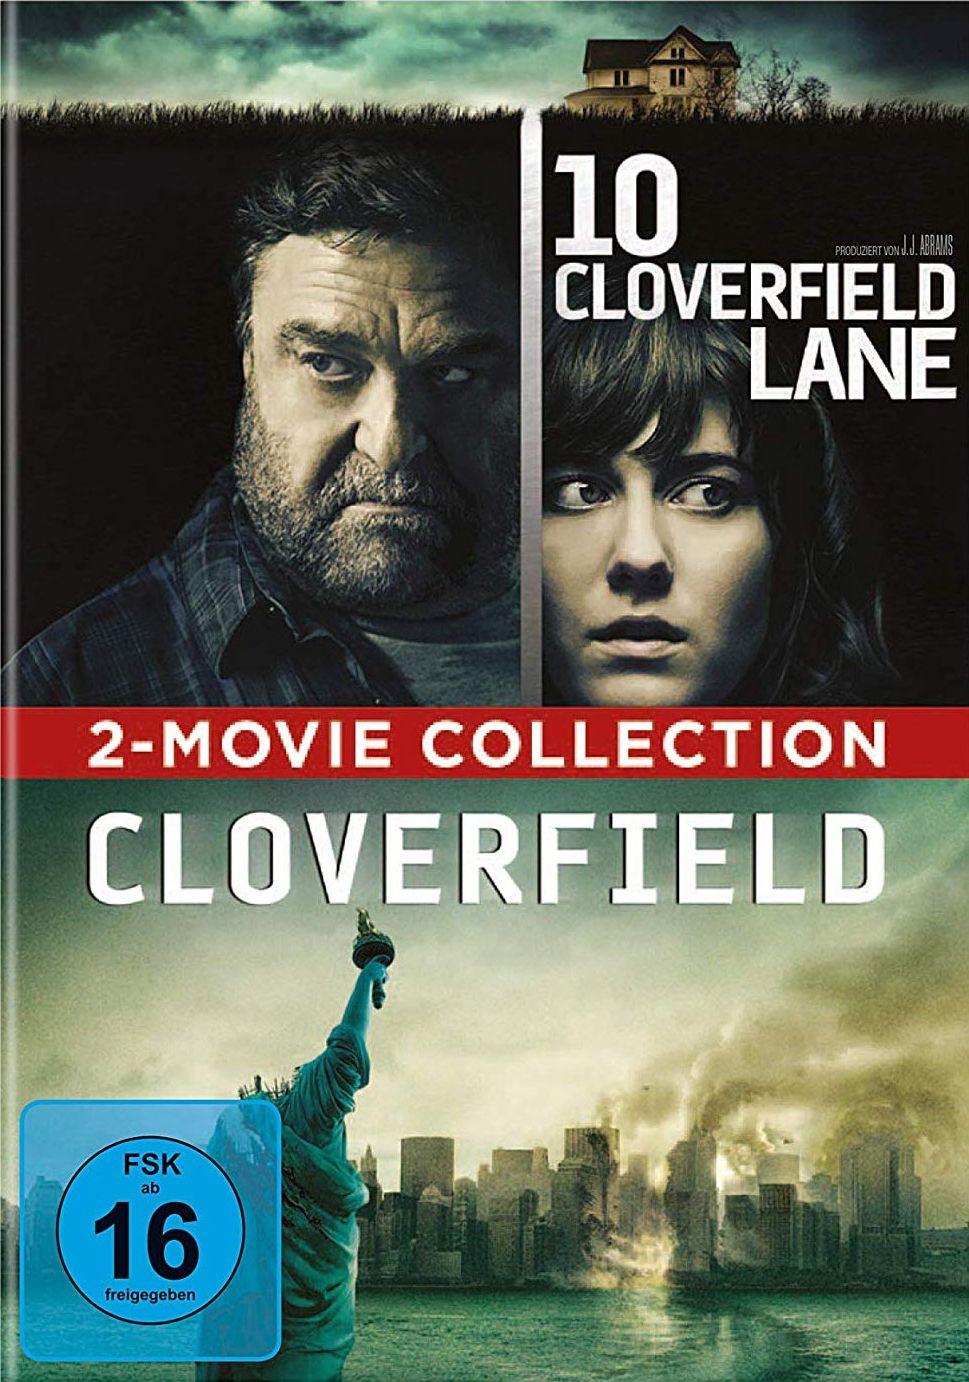 Cloverfield / 10 Cloverfield Lane (Double Feature) (2 Discs)